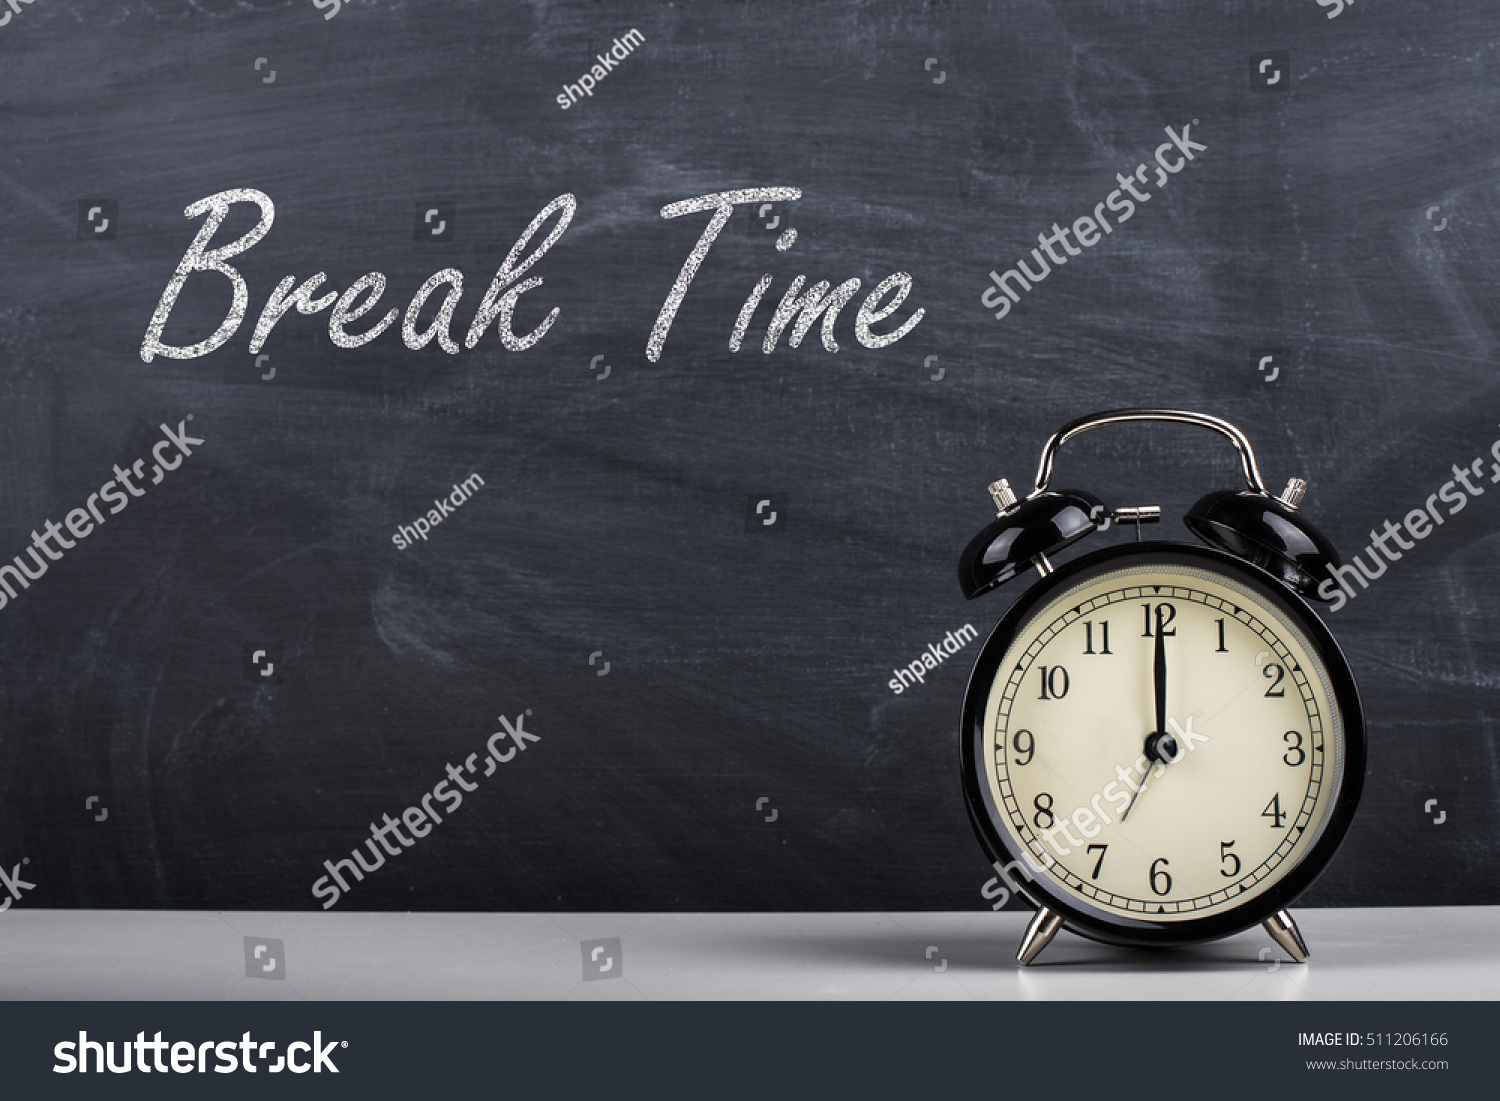  Text Break Time handwritten with white chalk on a blackboard and retro alarm clock #511206166